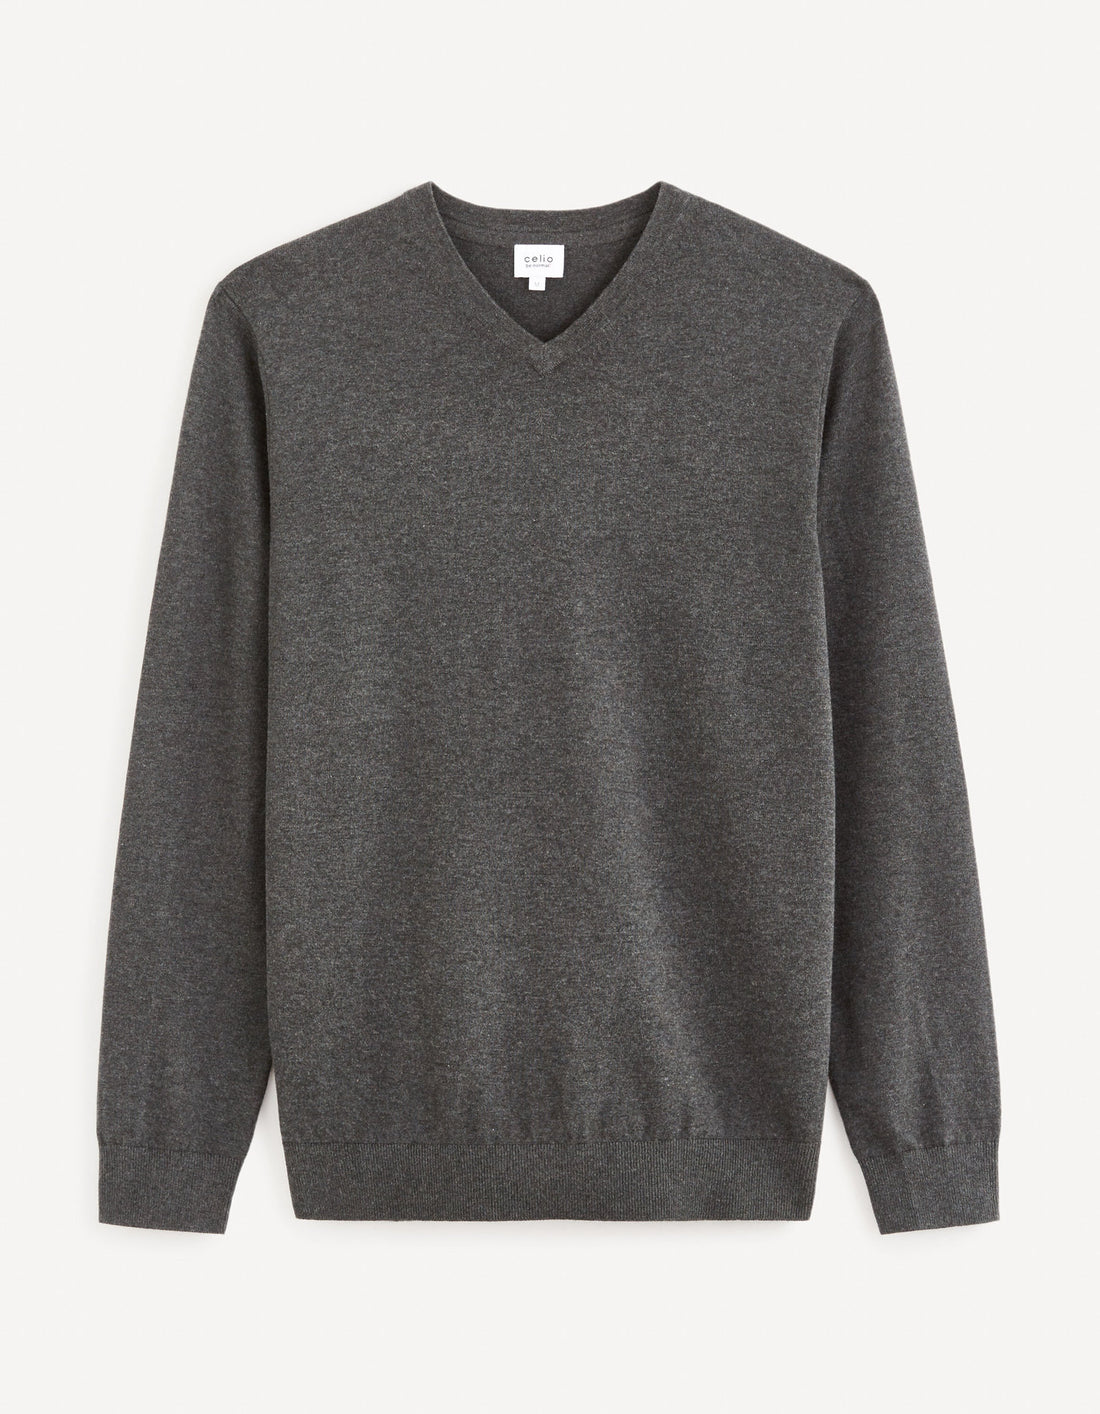 V-Neck Sweater 100% Cotton - Anthracite_DECOTONV_ANTHRA MEL_02